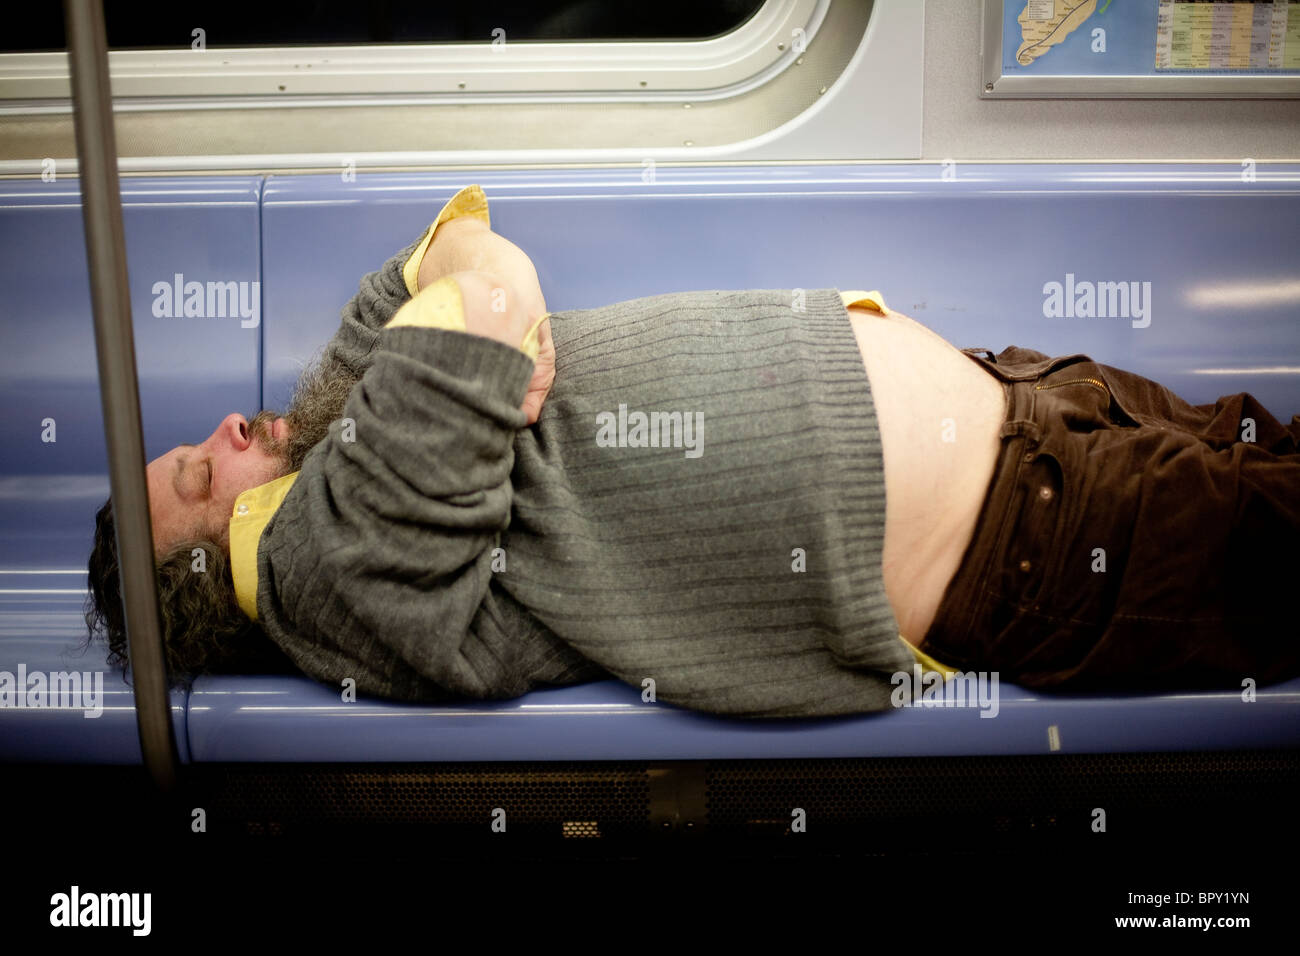 Man sleeping on bench in New York City Subway car Stock Photo